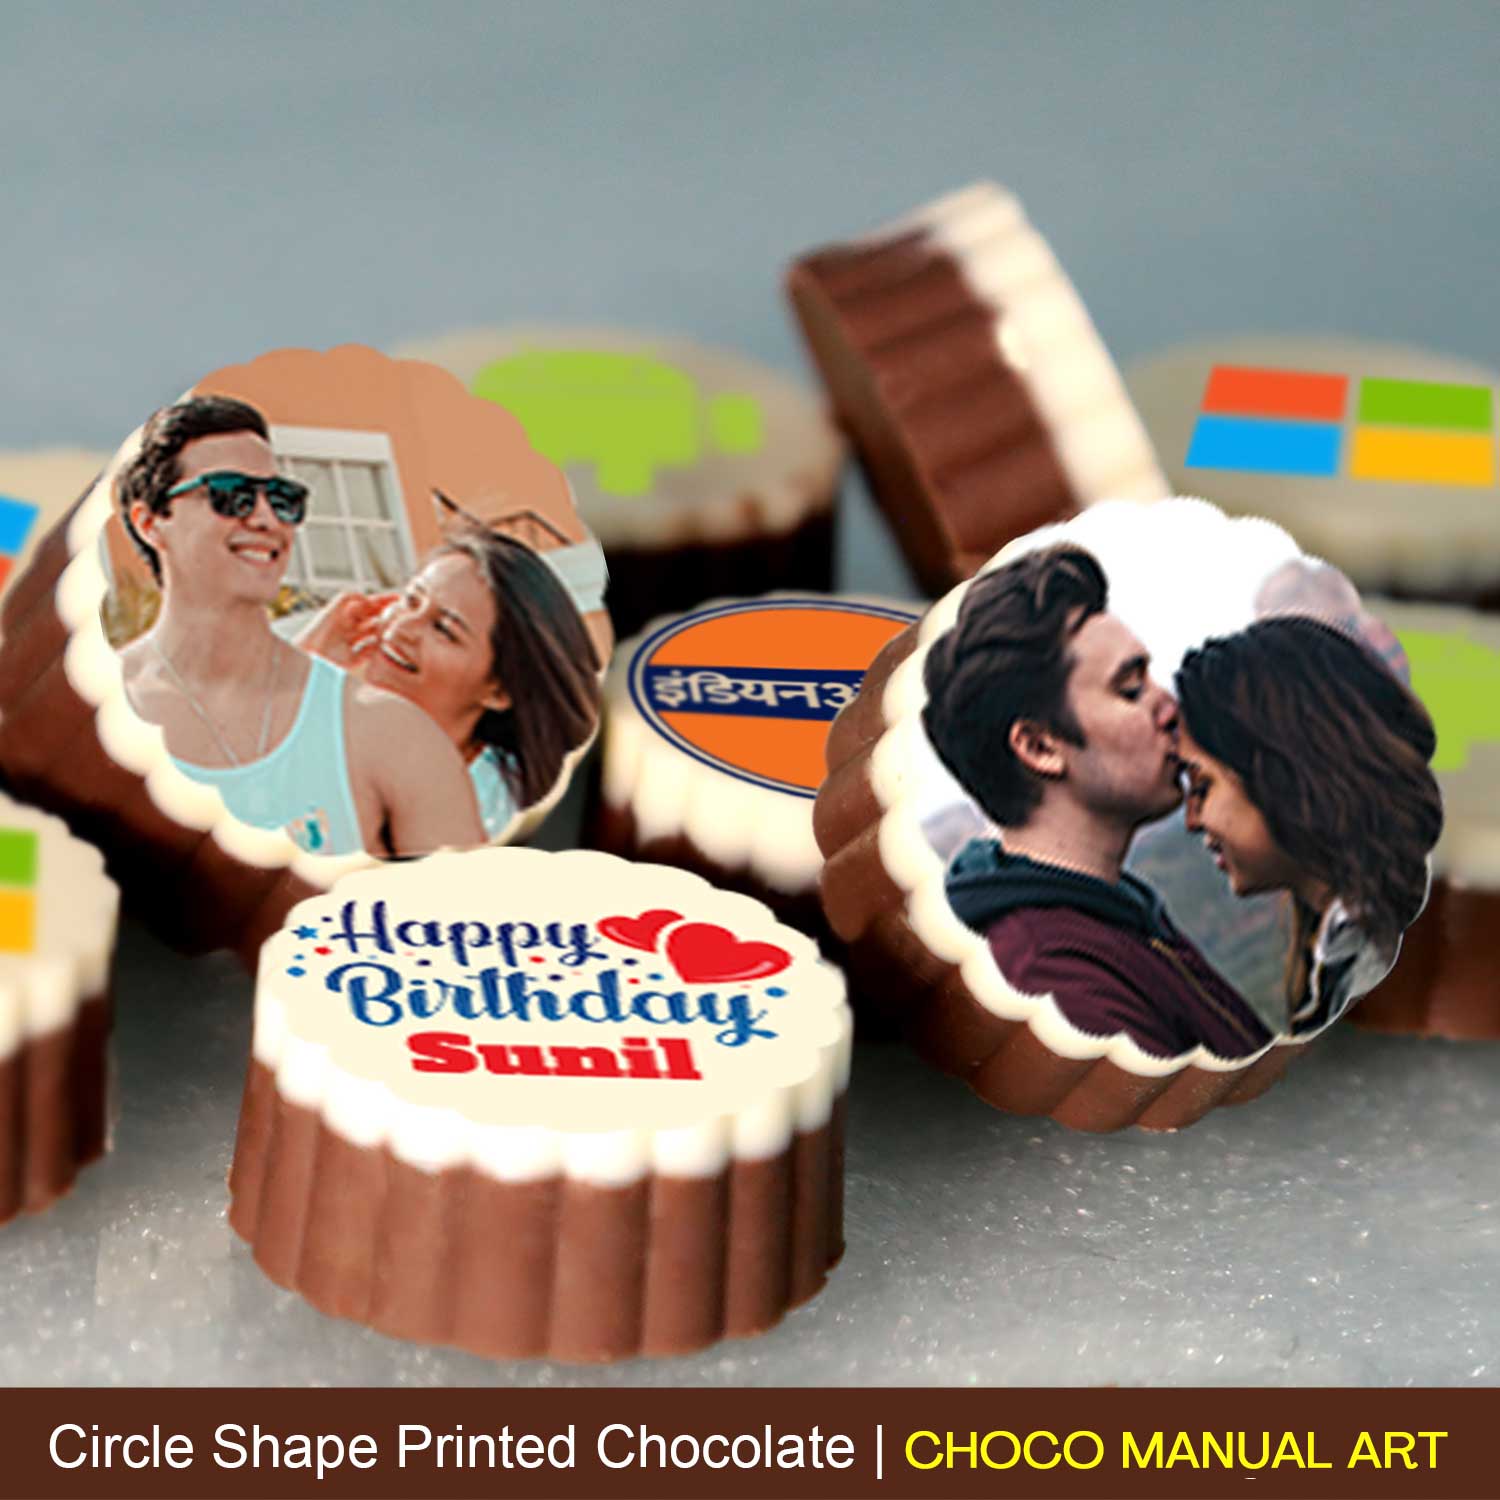 Name printed chocolates to congratulate the couple